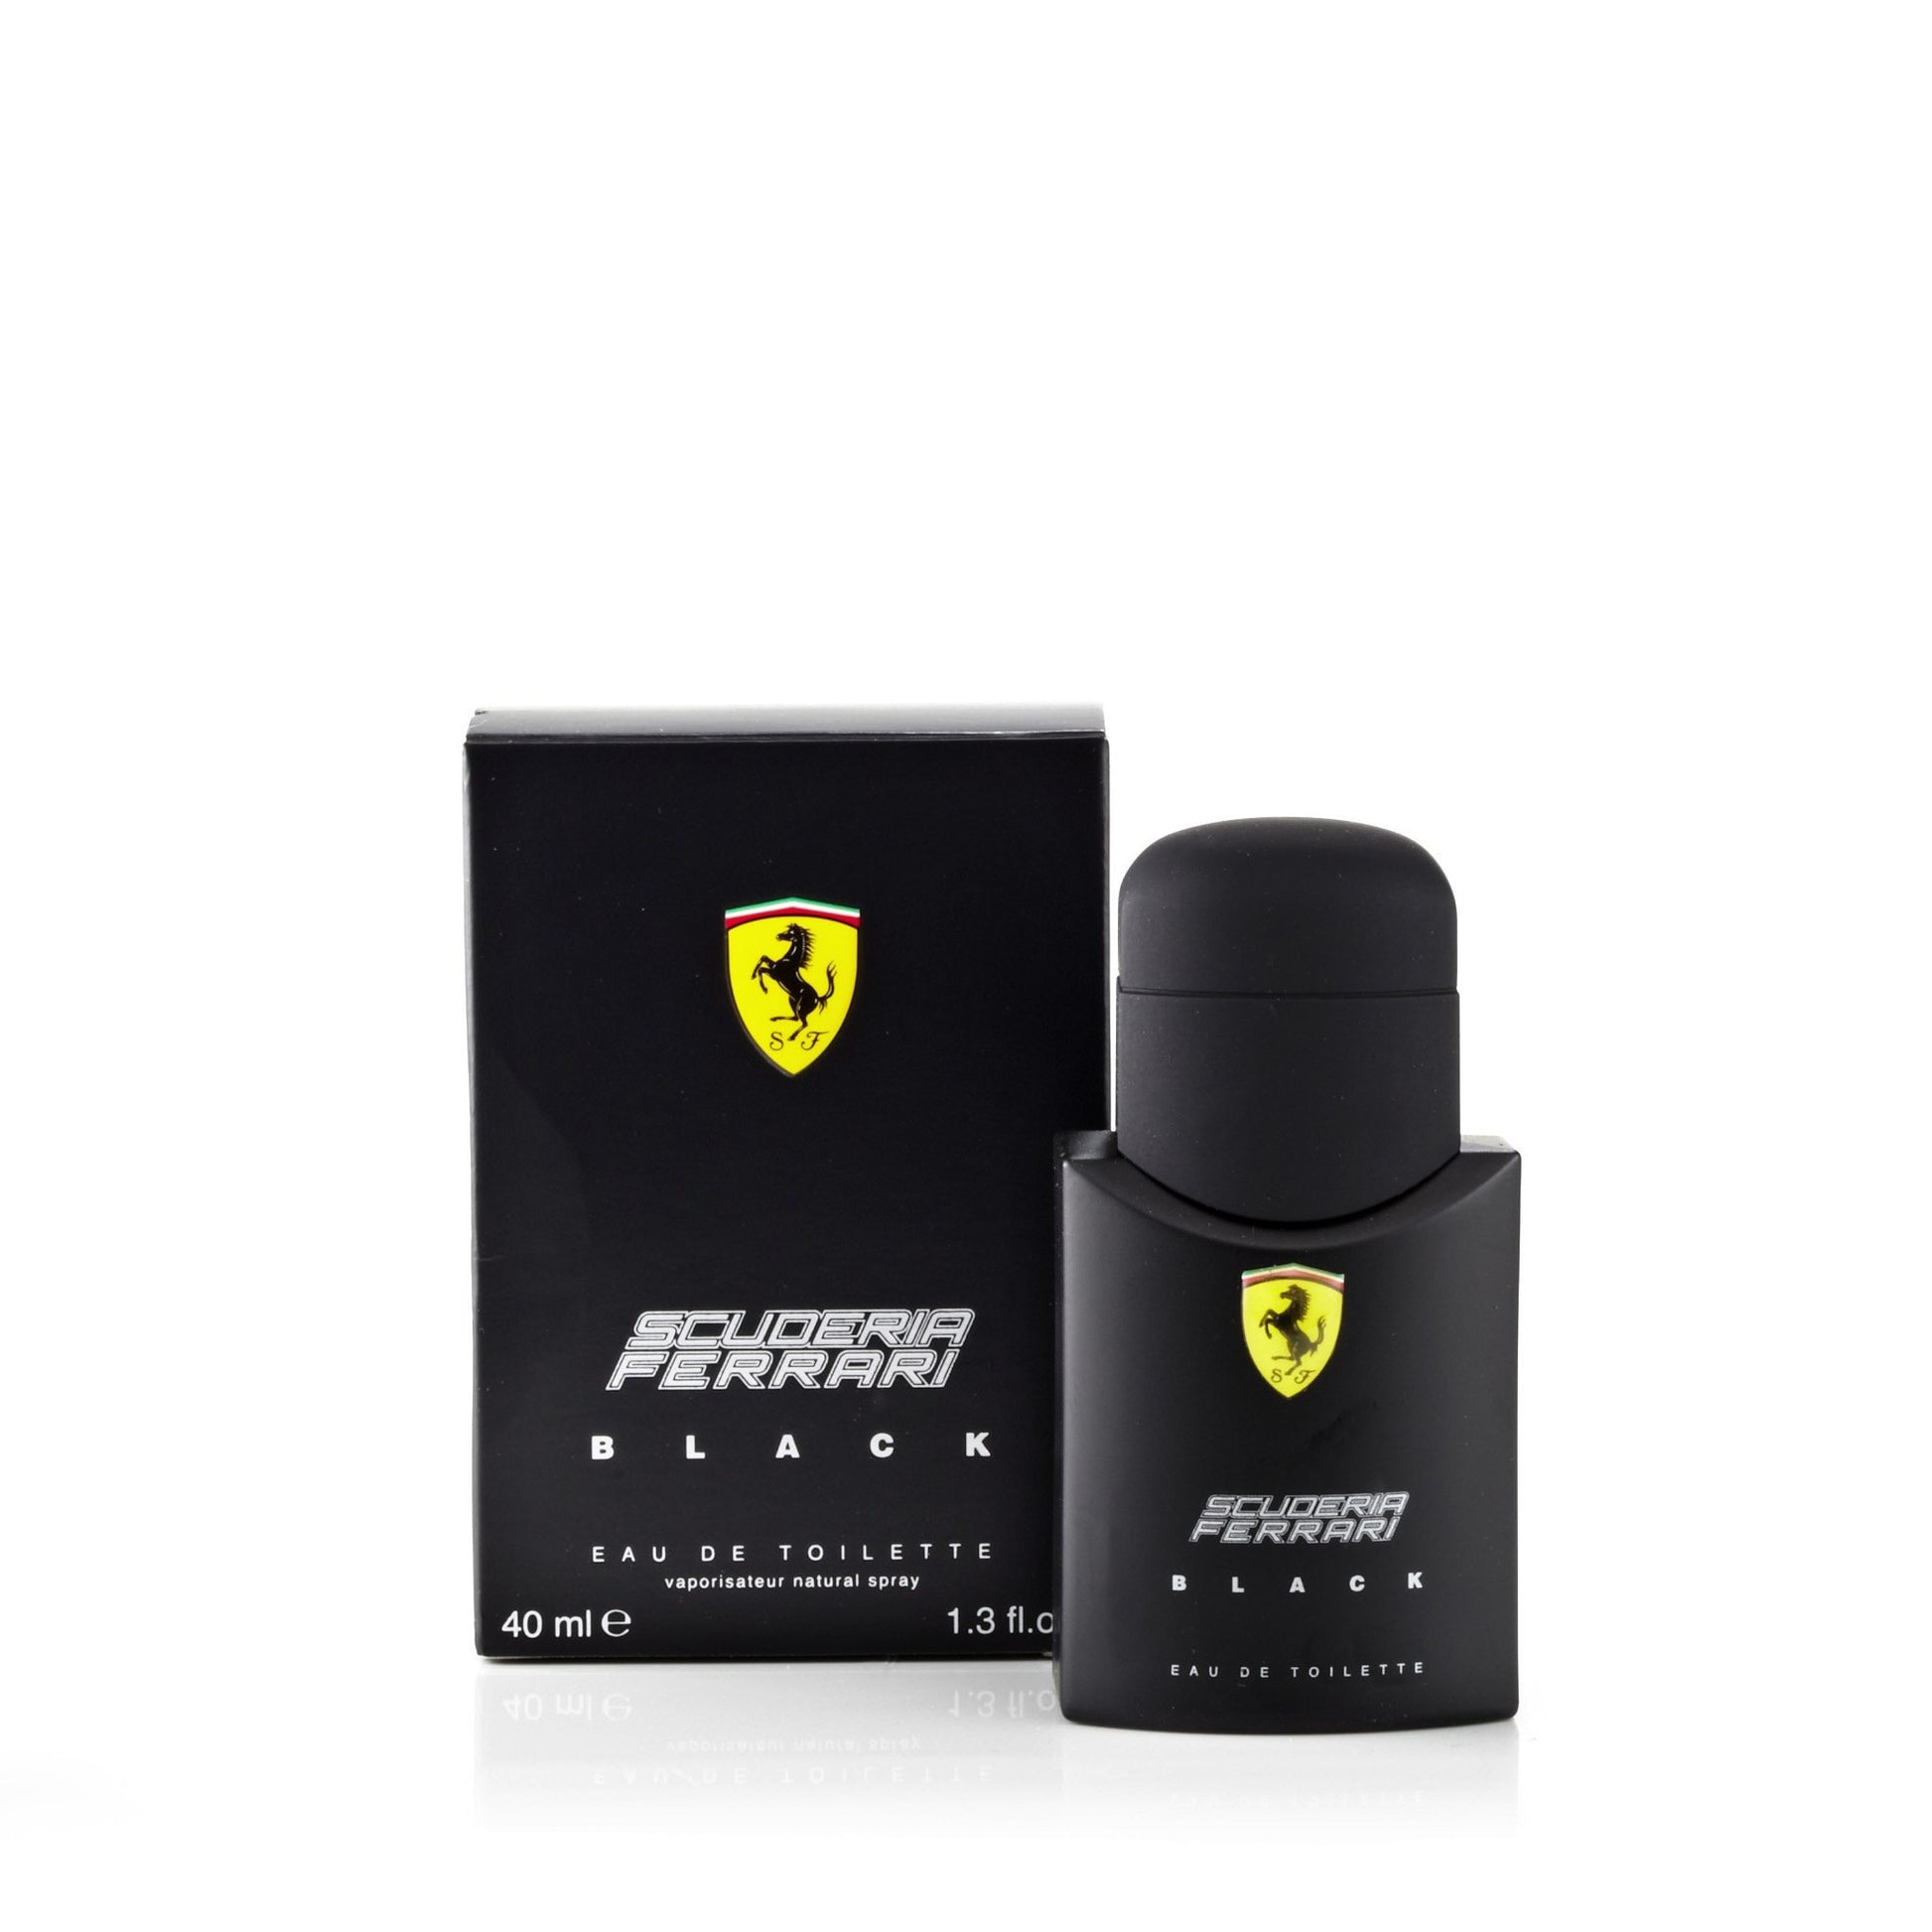  Black Eau de Toilette Spray for Men by Ferrari  1.3 oz. Click to open in modal